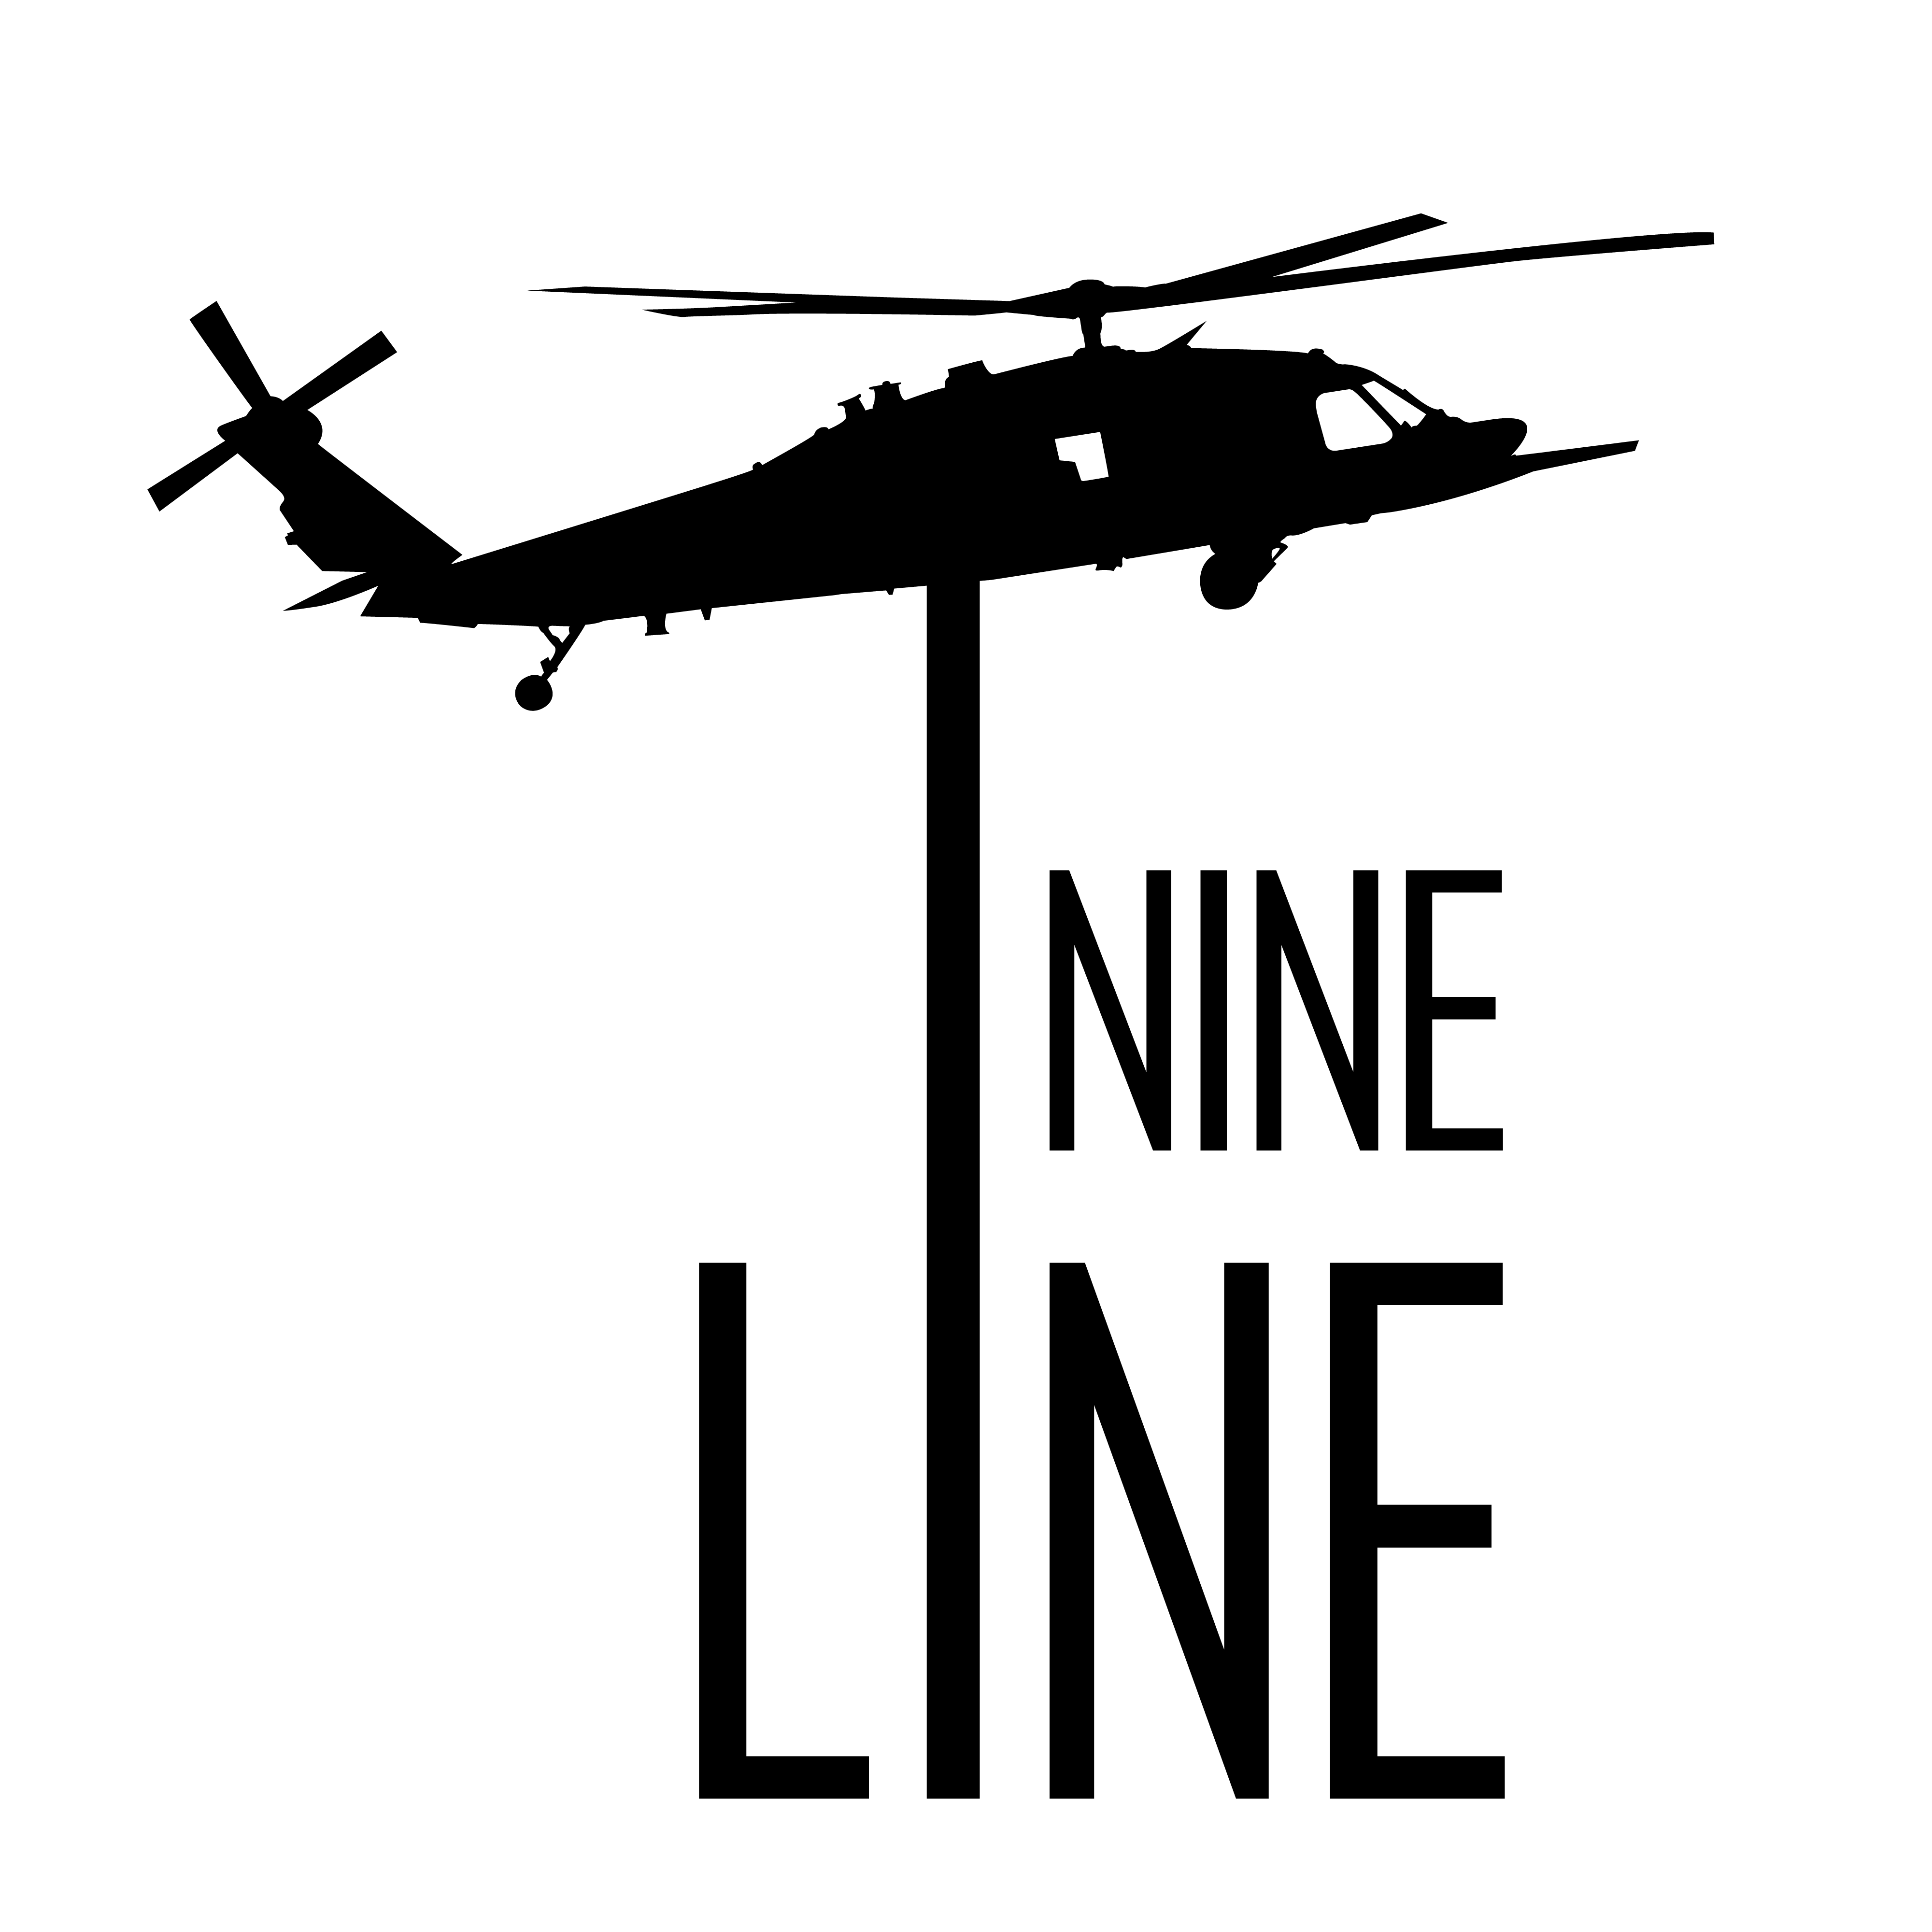 Nine Line Logo